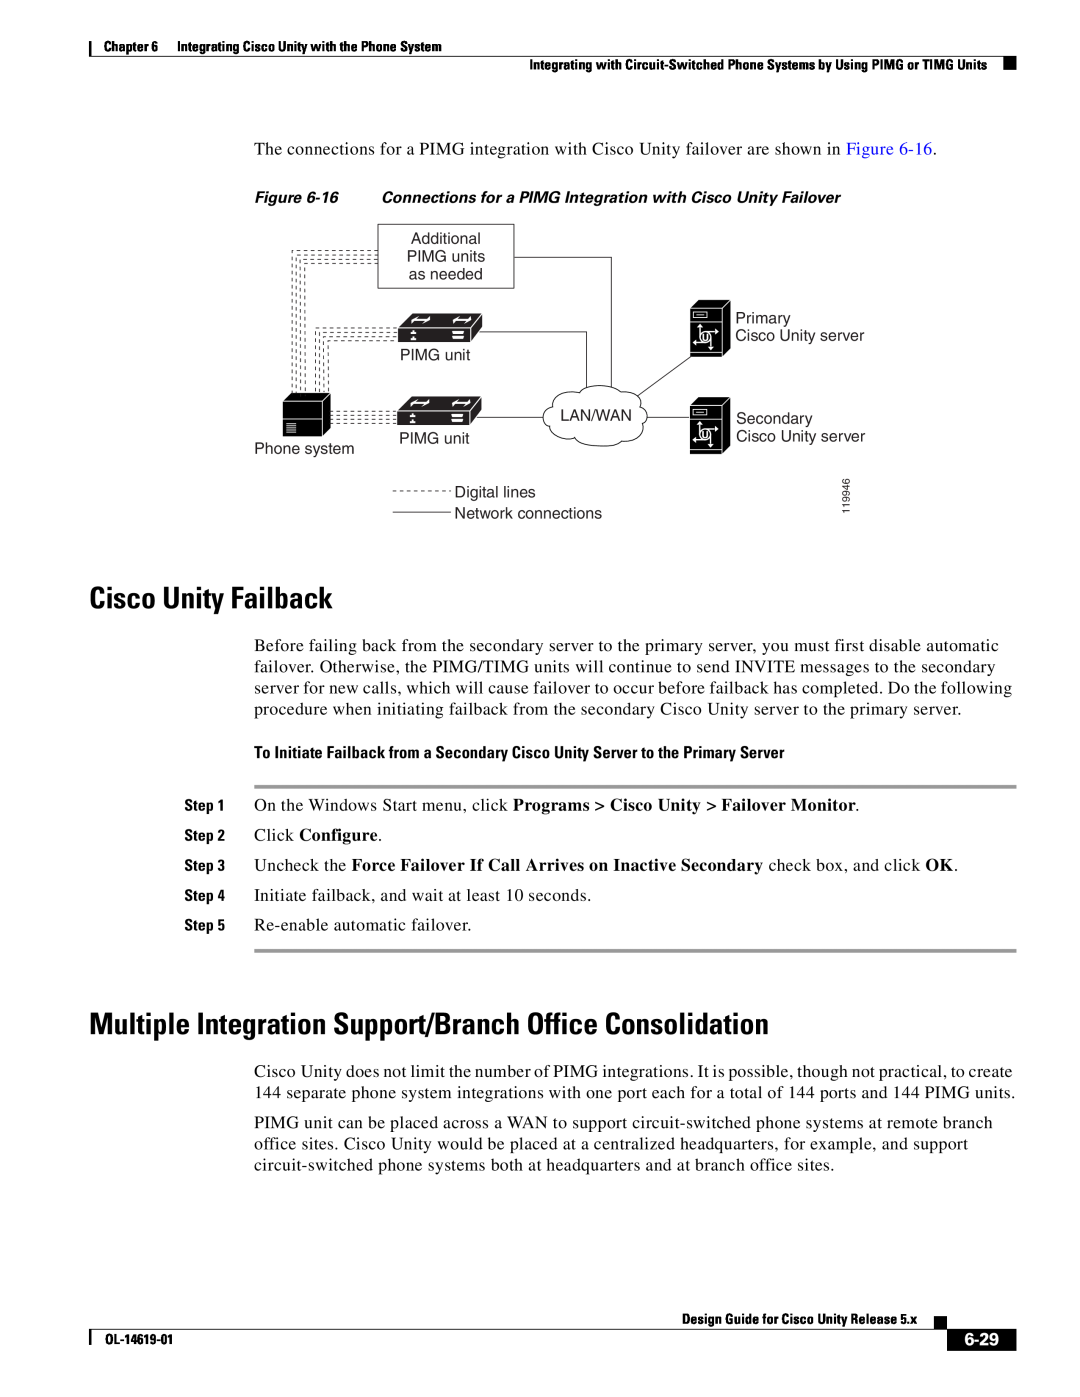 Cisco Systems OL-14619-01 manual Cisco Unity Failback, Multiple Integration Support/Branch Office Consolidation, 6-29 